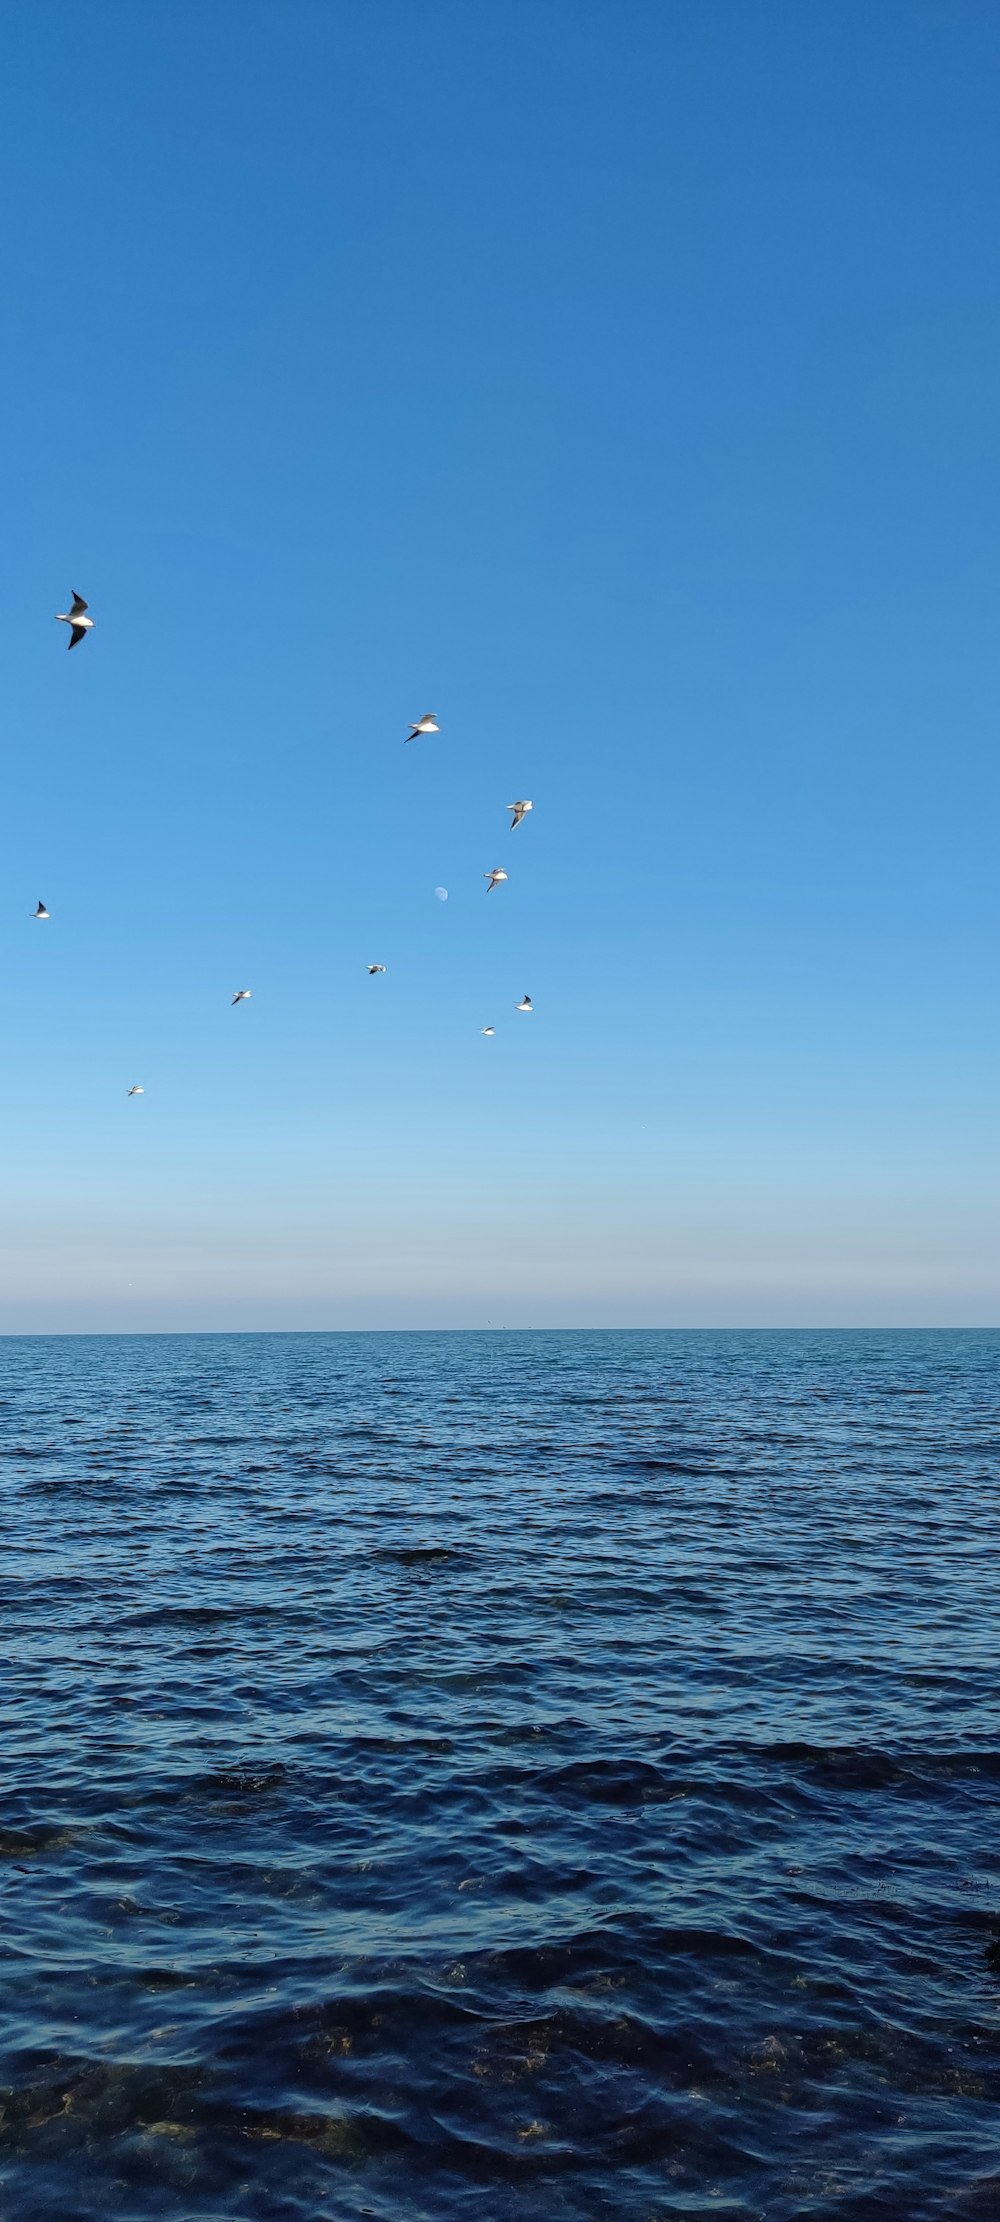 Un grupo de aves volando sobre una gran masa de agua